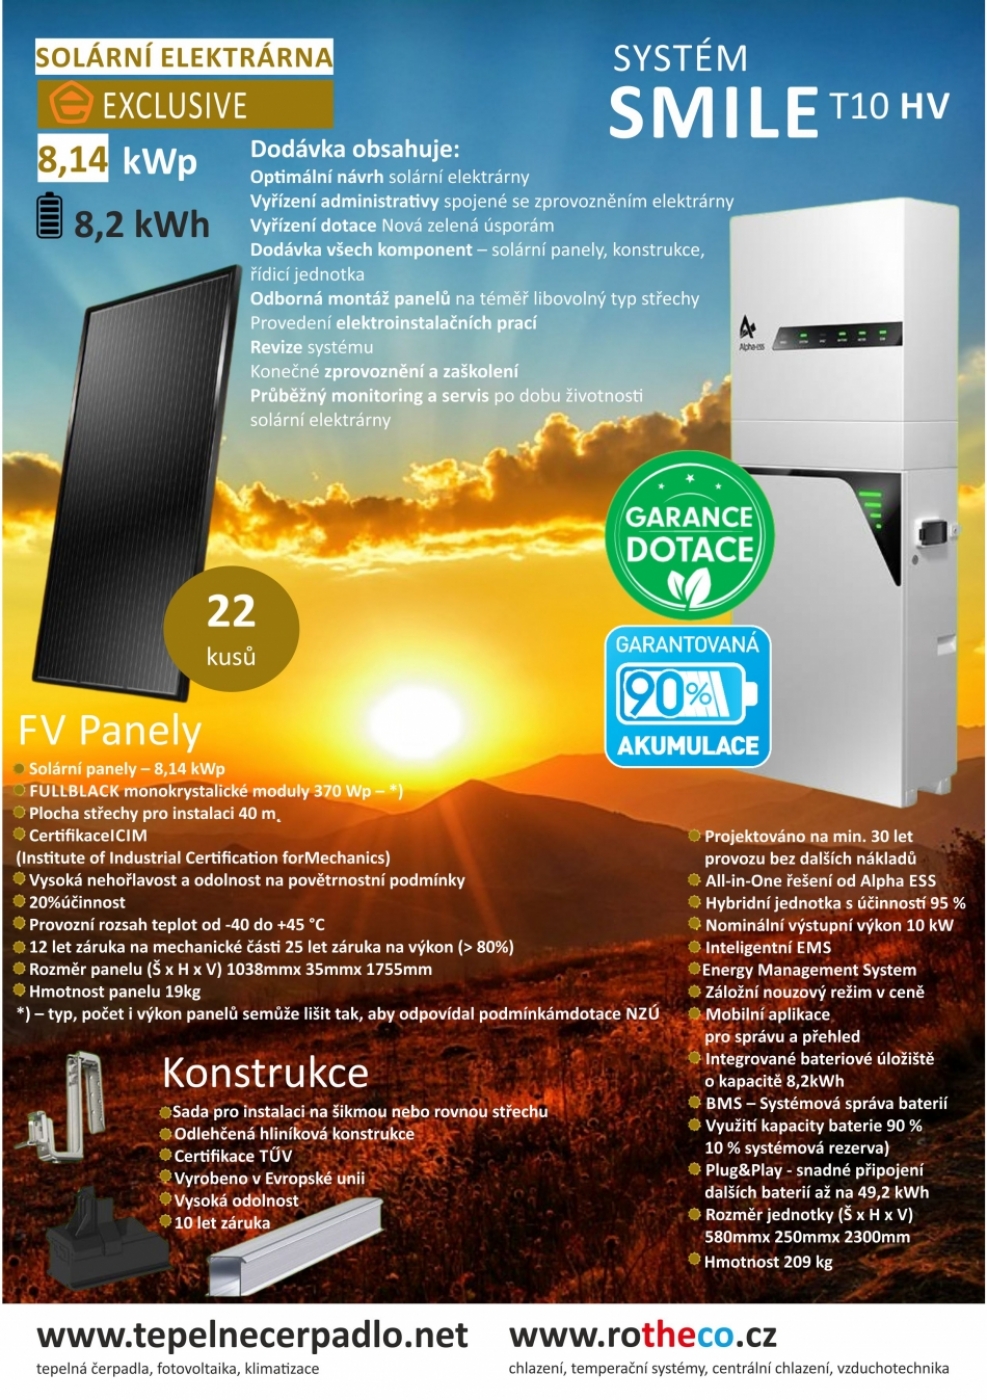 https://www.tepelnecerpadlo.net/clanek-odborna-montaz-fotovoltaicke-elektrarny-2012-60